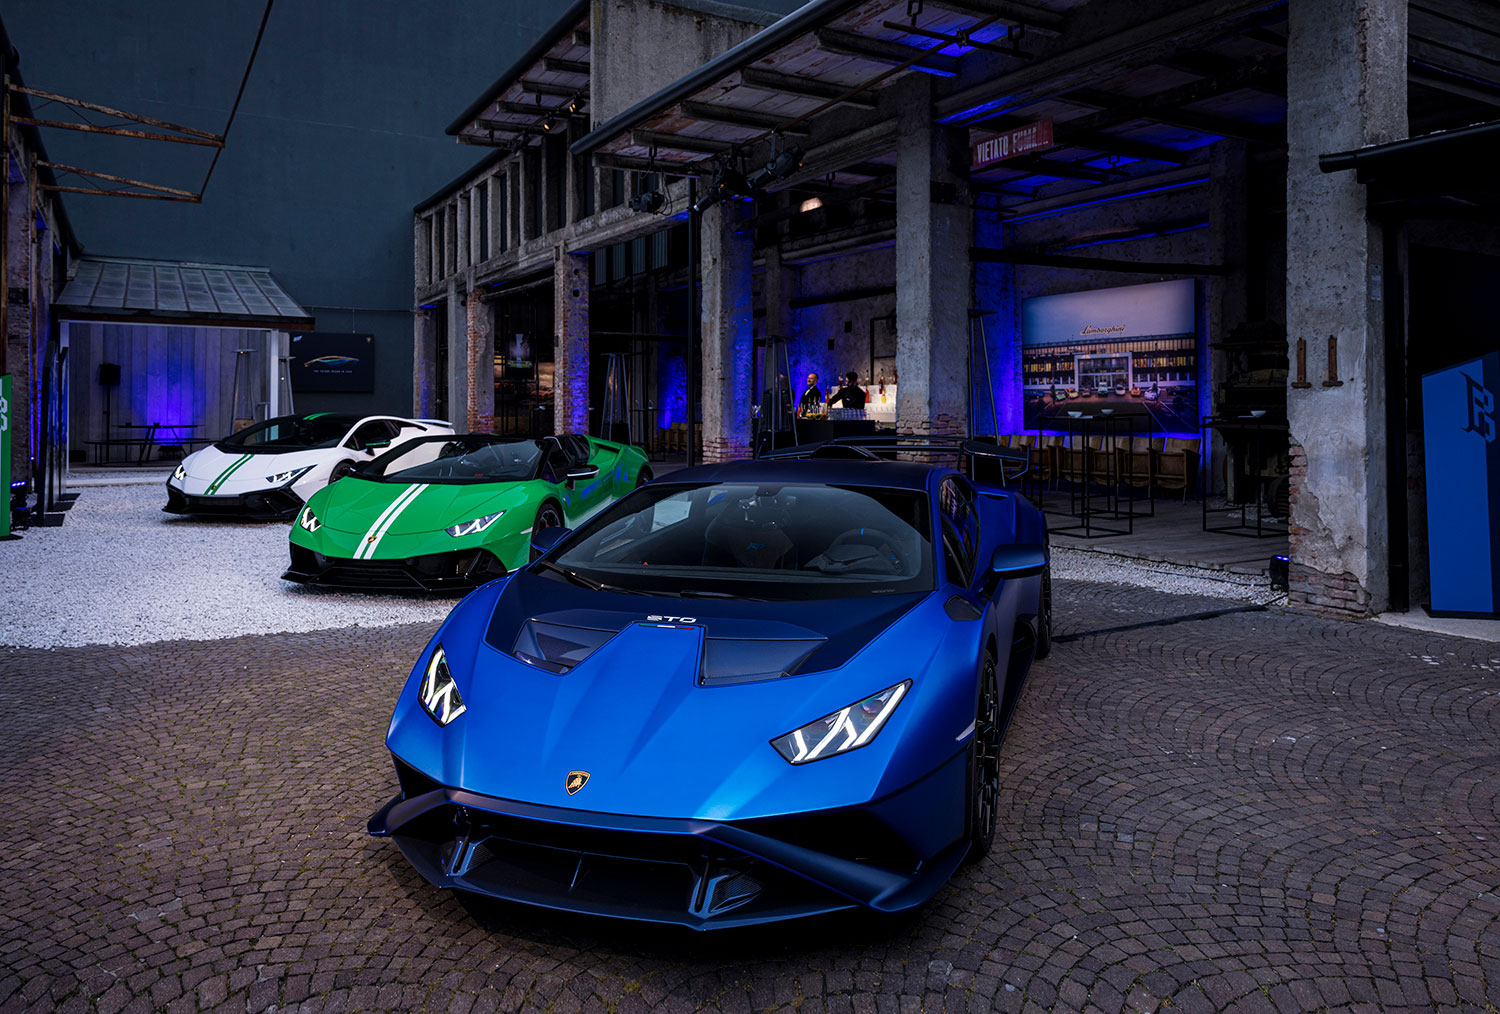 Lamborghini: igniting a thrilling voyage into the future